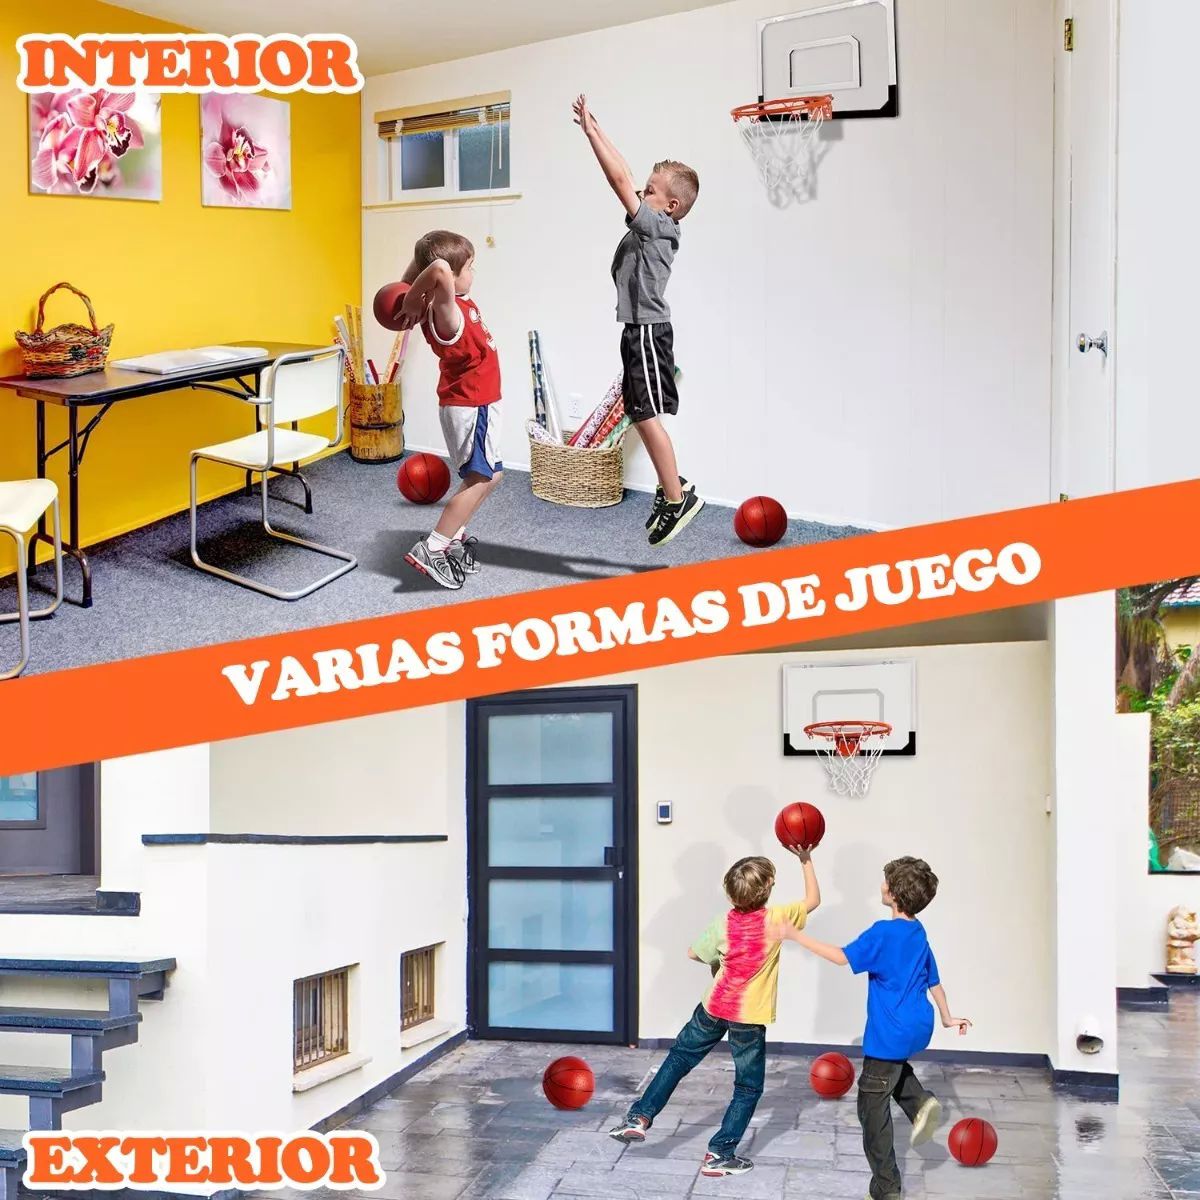 Cancha Canasta Baloncesto Basketball Mini Juguete Infantil